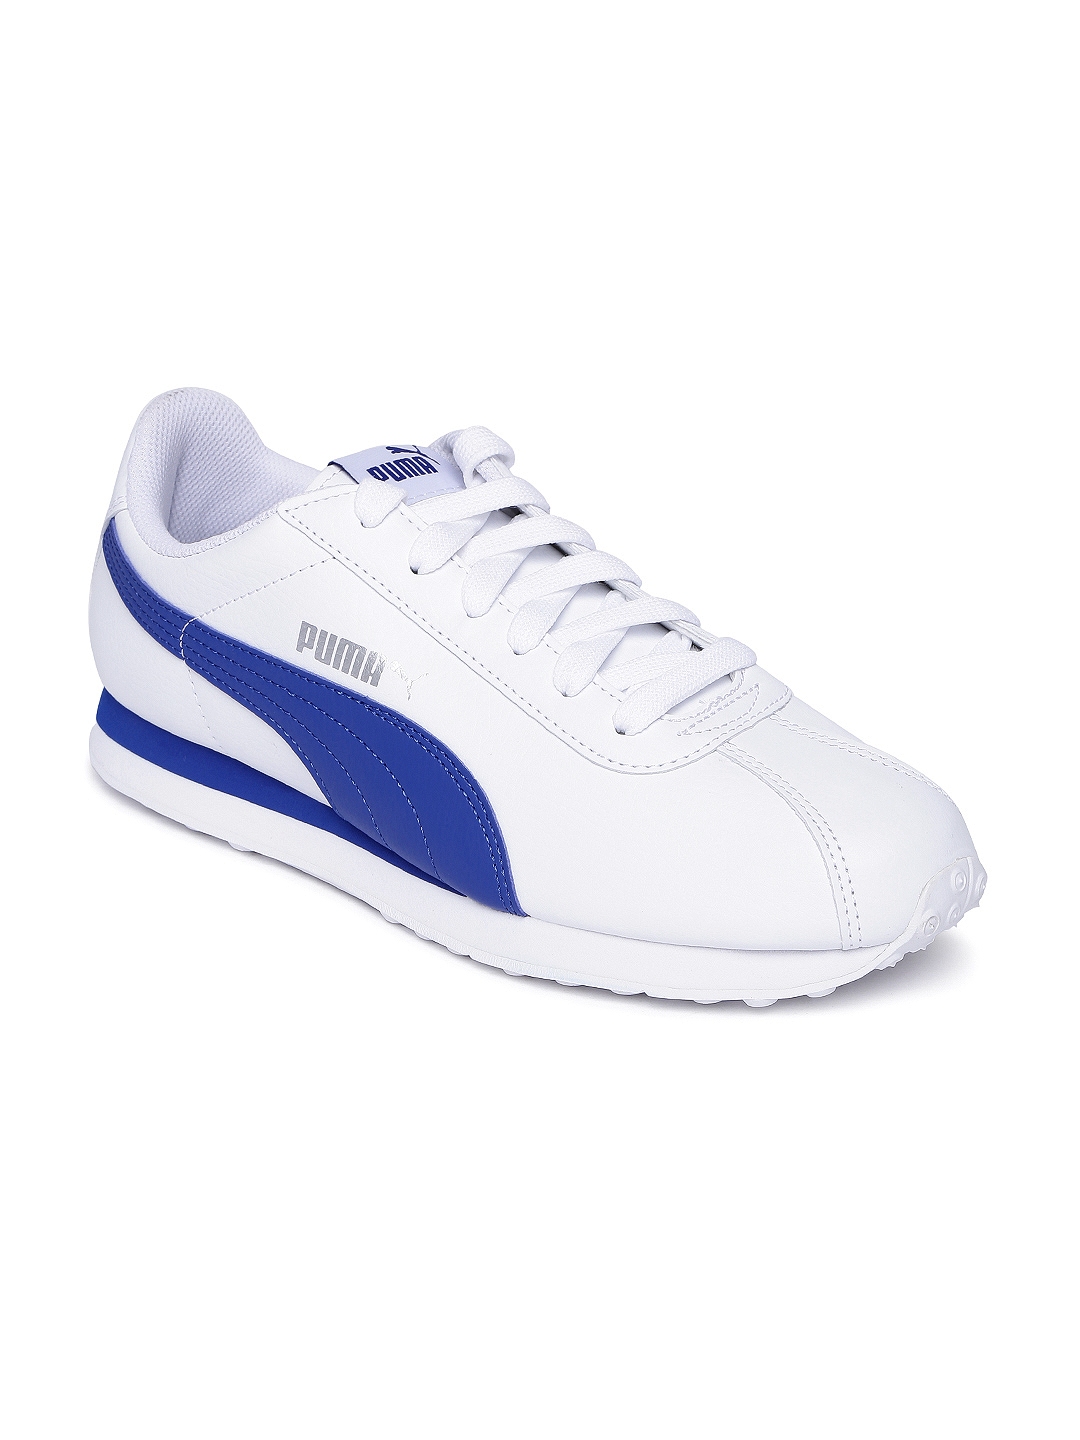 puma unisex white sneakers